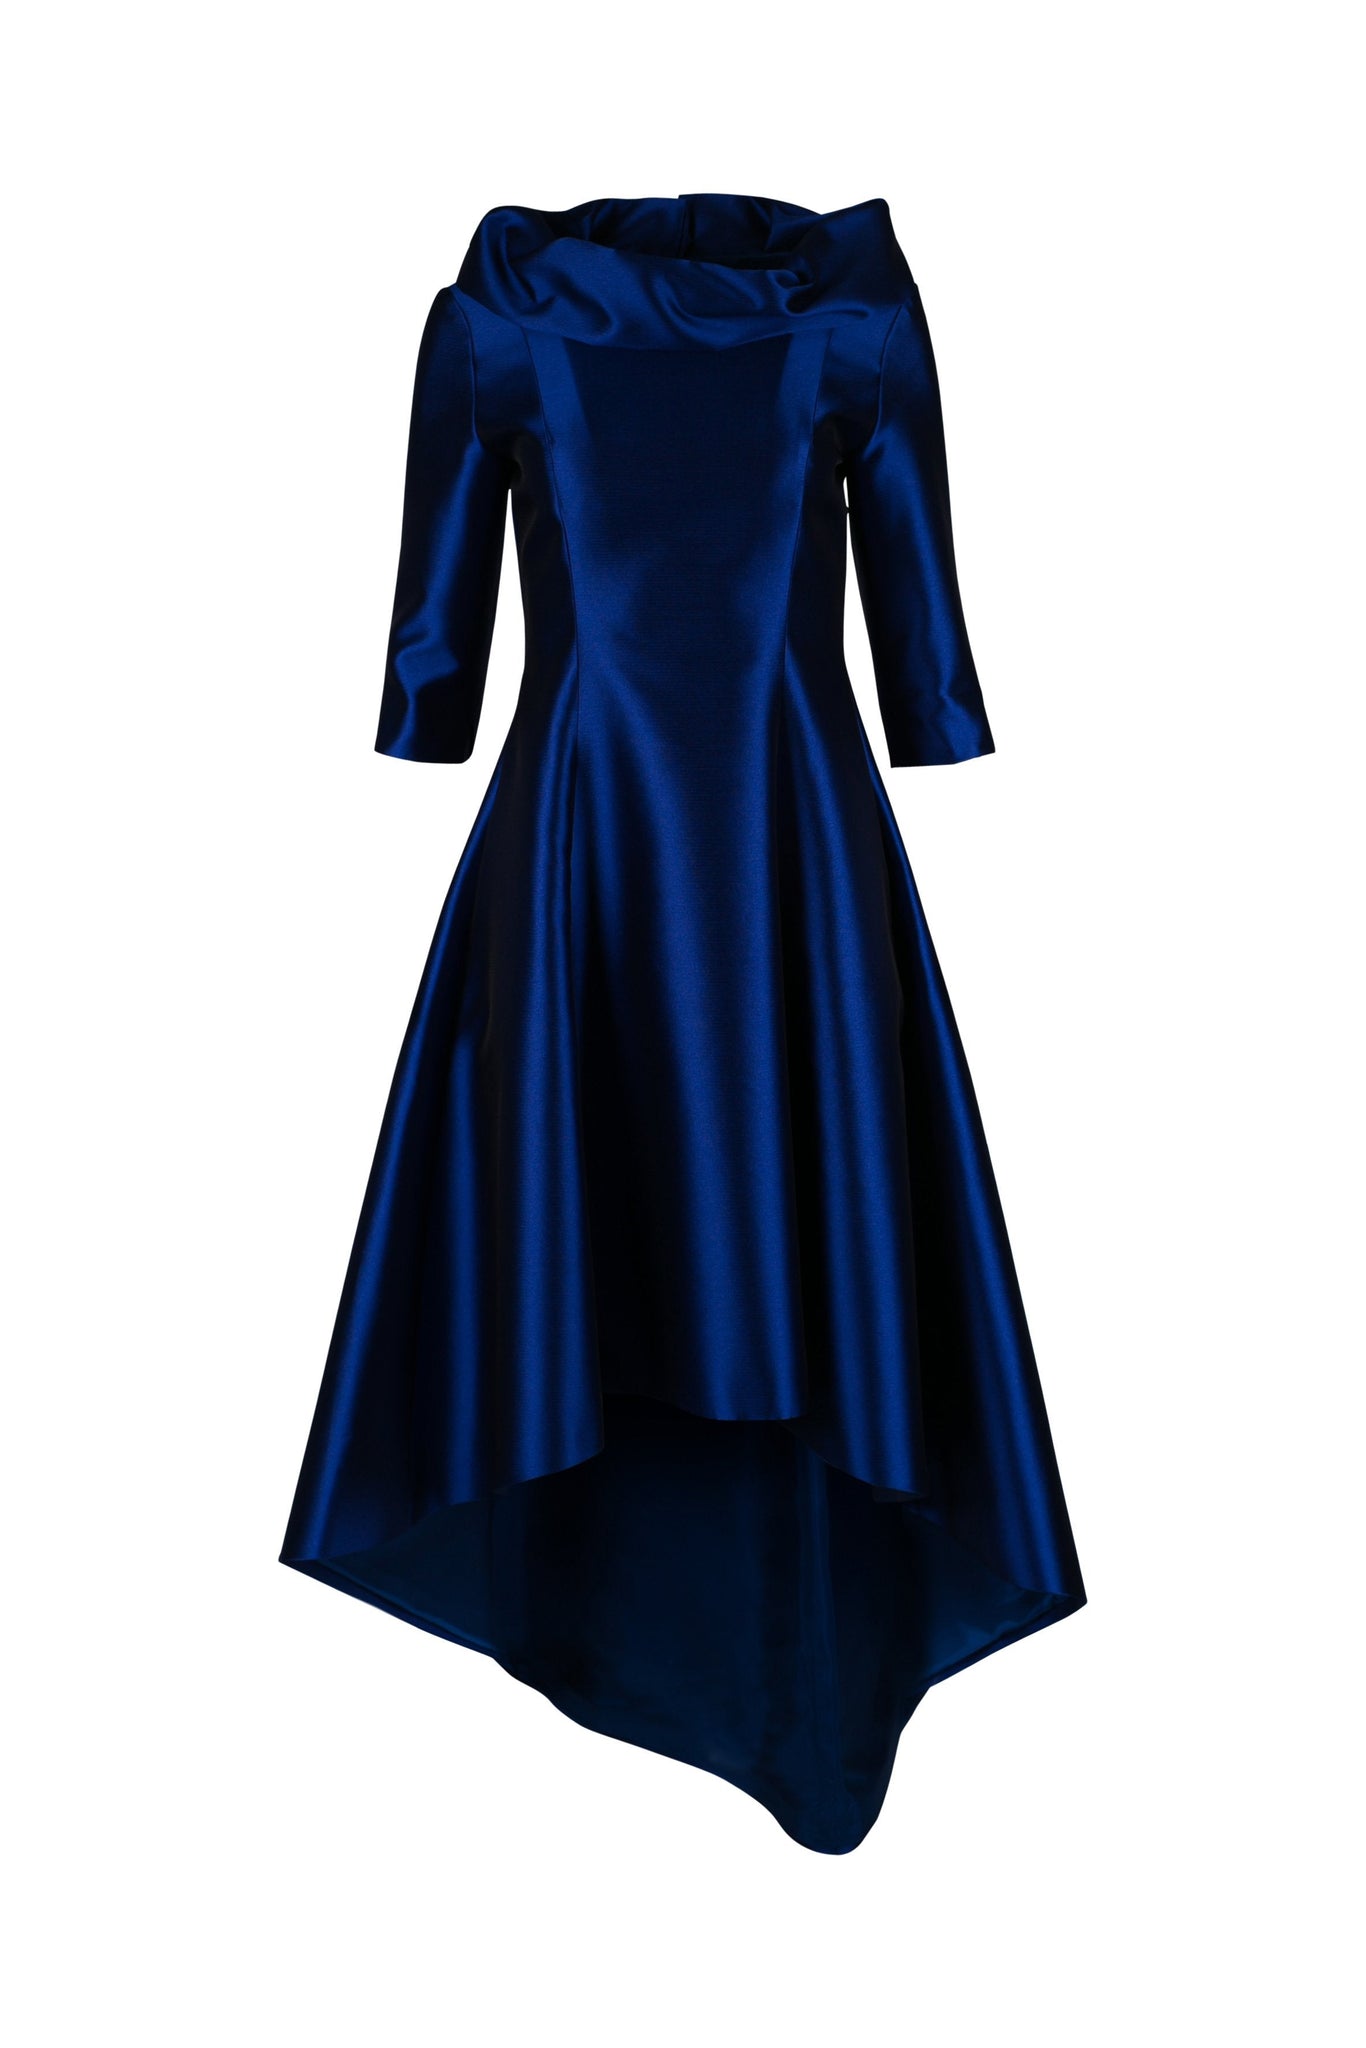 Fely Campo 17128 - Dipped hem print dress